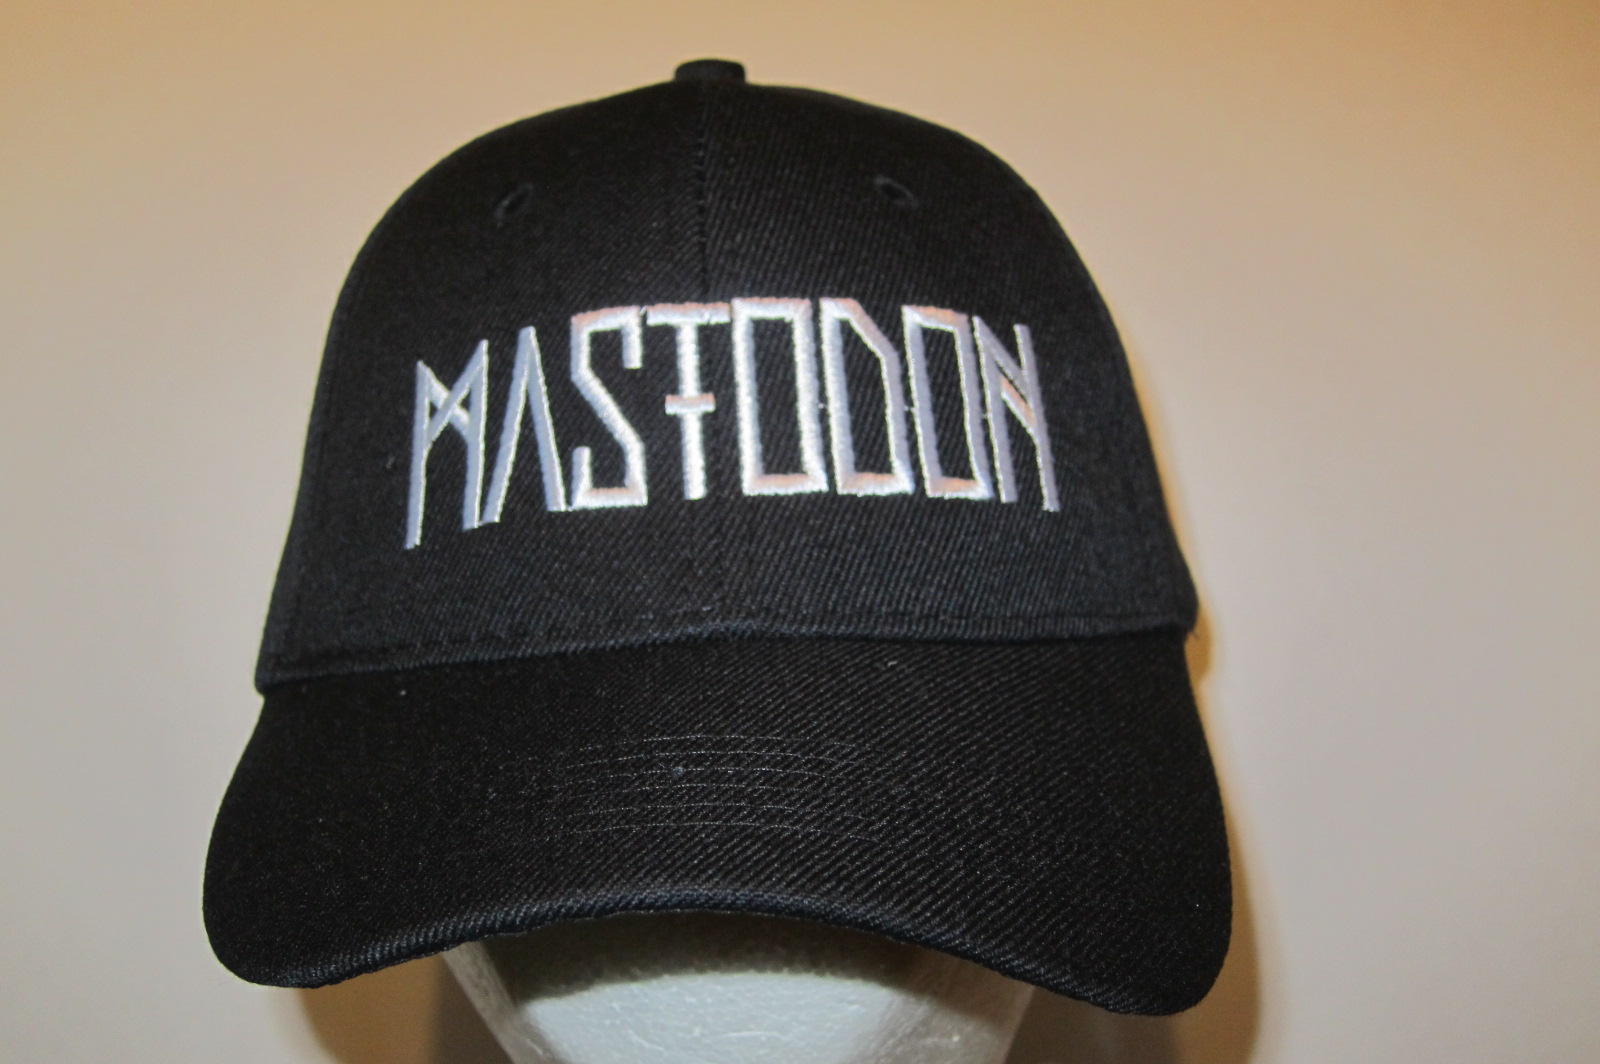 MASTODON - Embroidered - Baseball Cap - Adjustable Velcro Back - One Size Fits All UNISEX